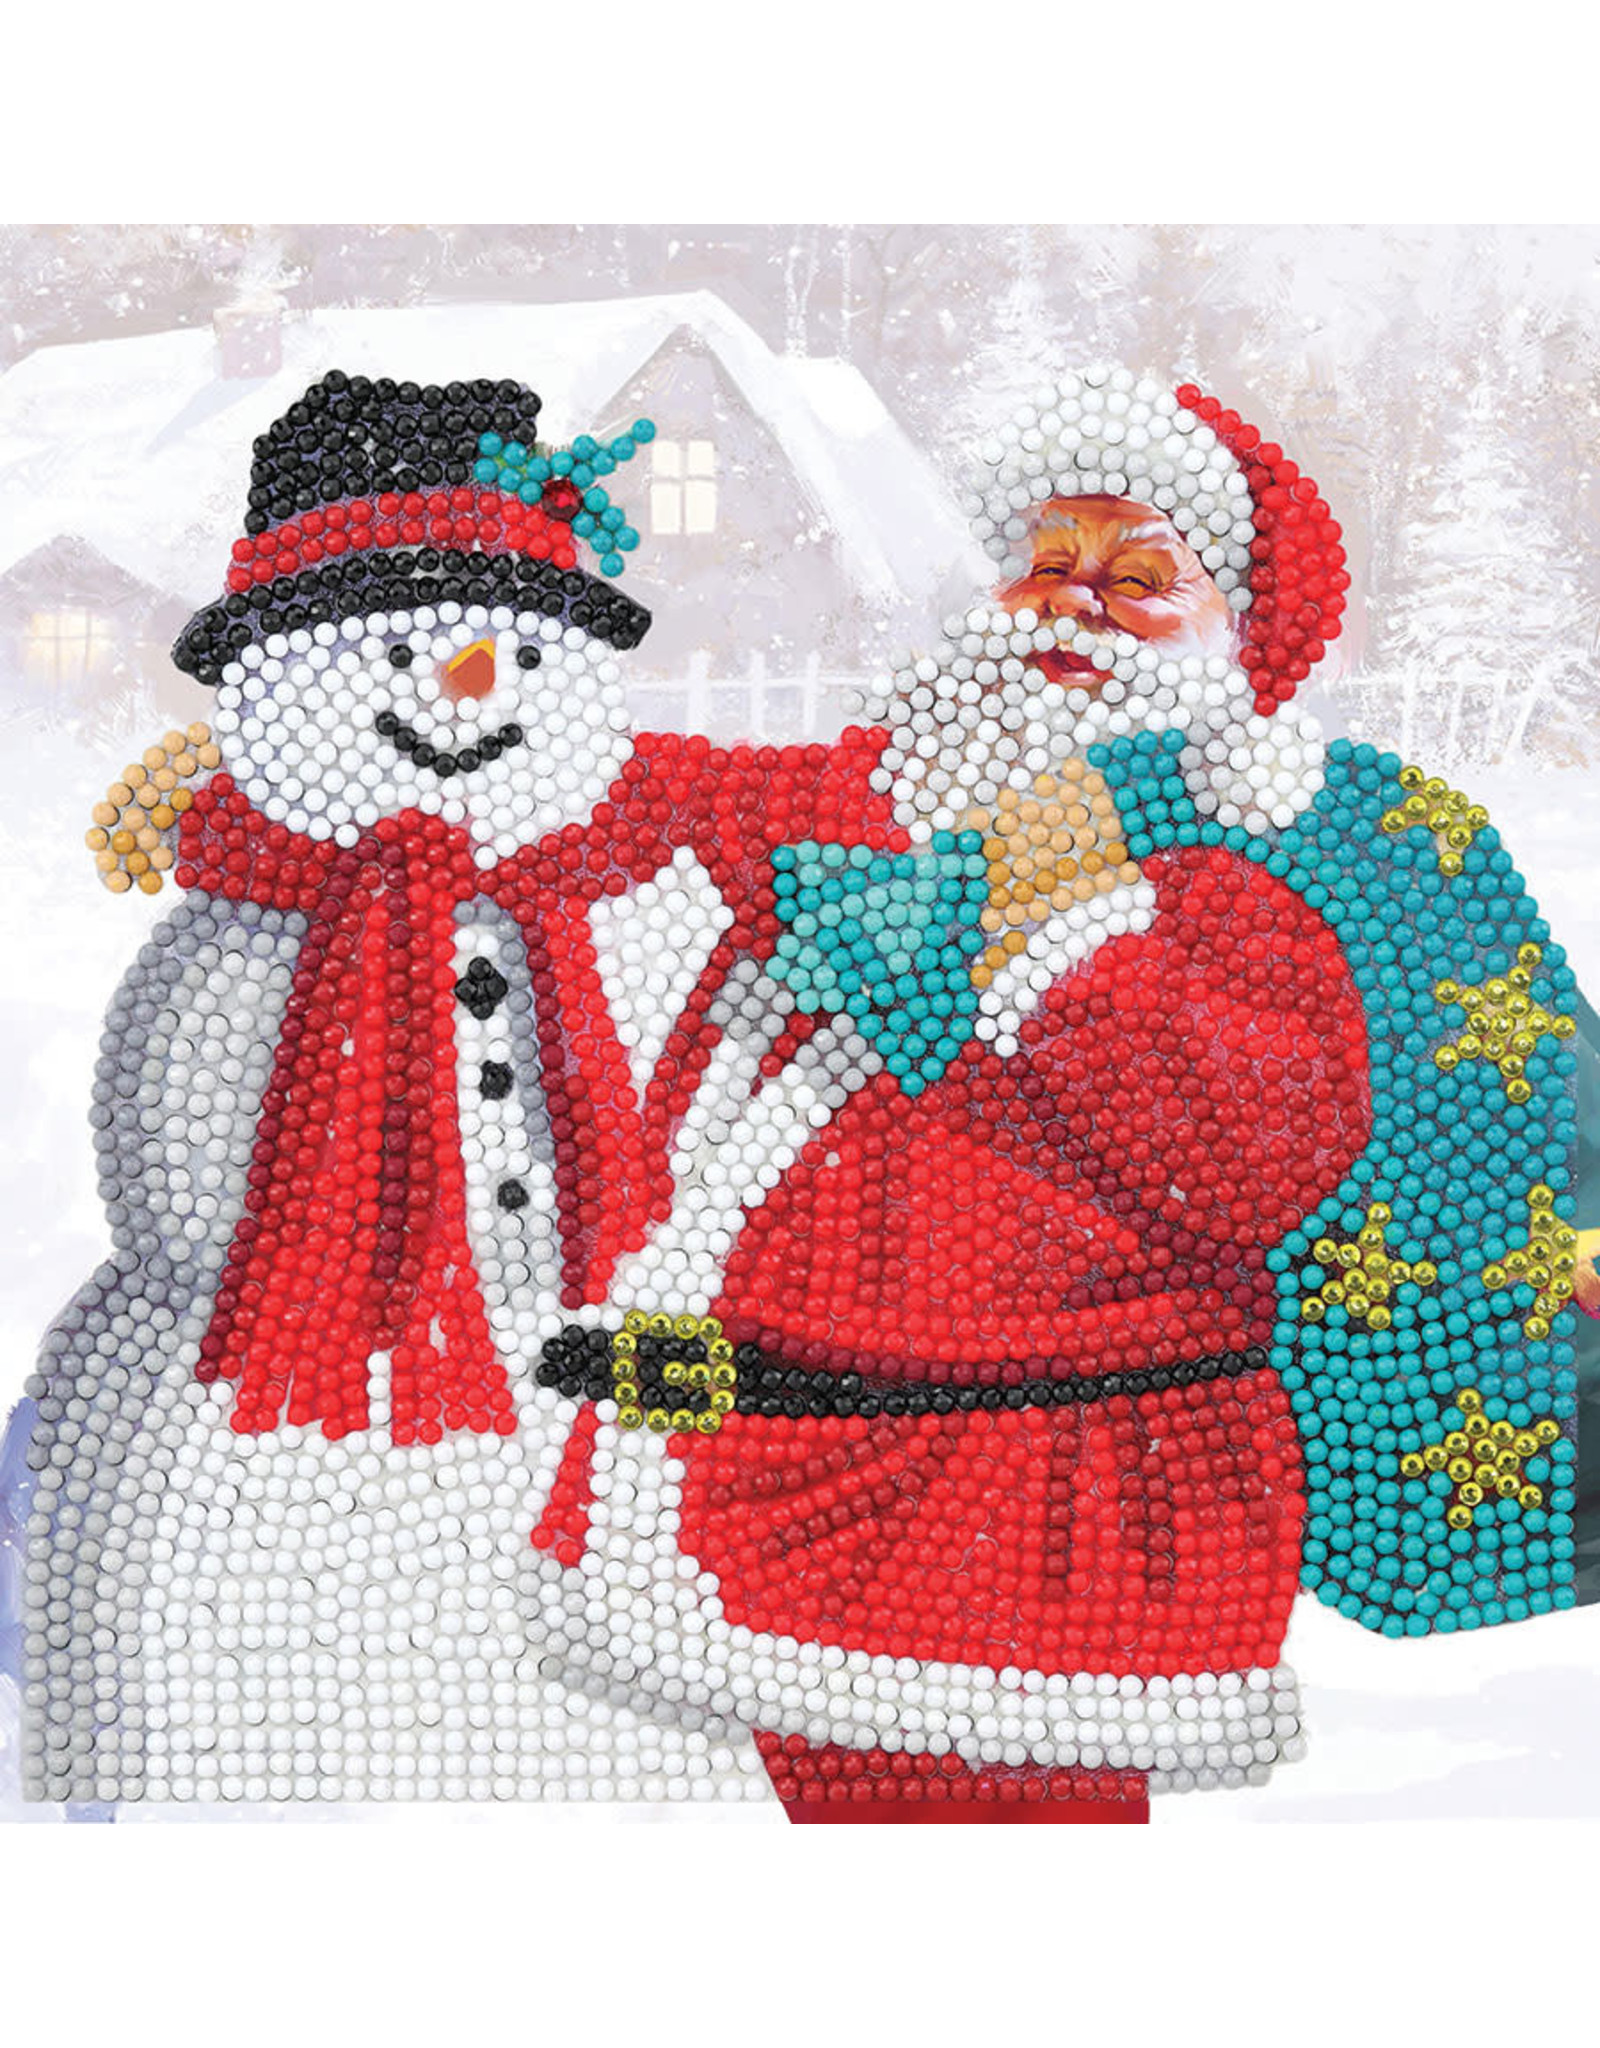 D.I.Y Crystal Art Kit Crystal Art Card Kit - Santa and Snowman